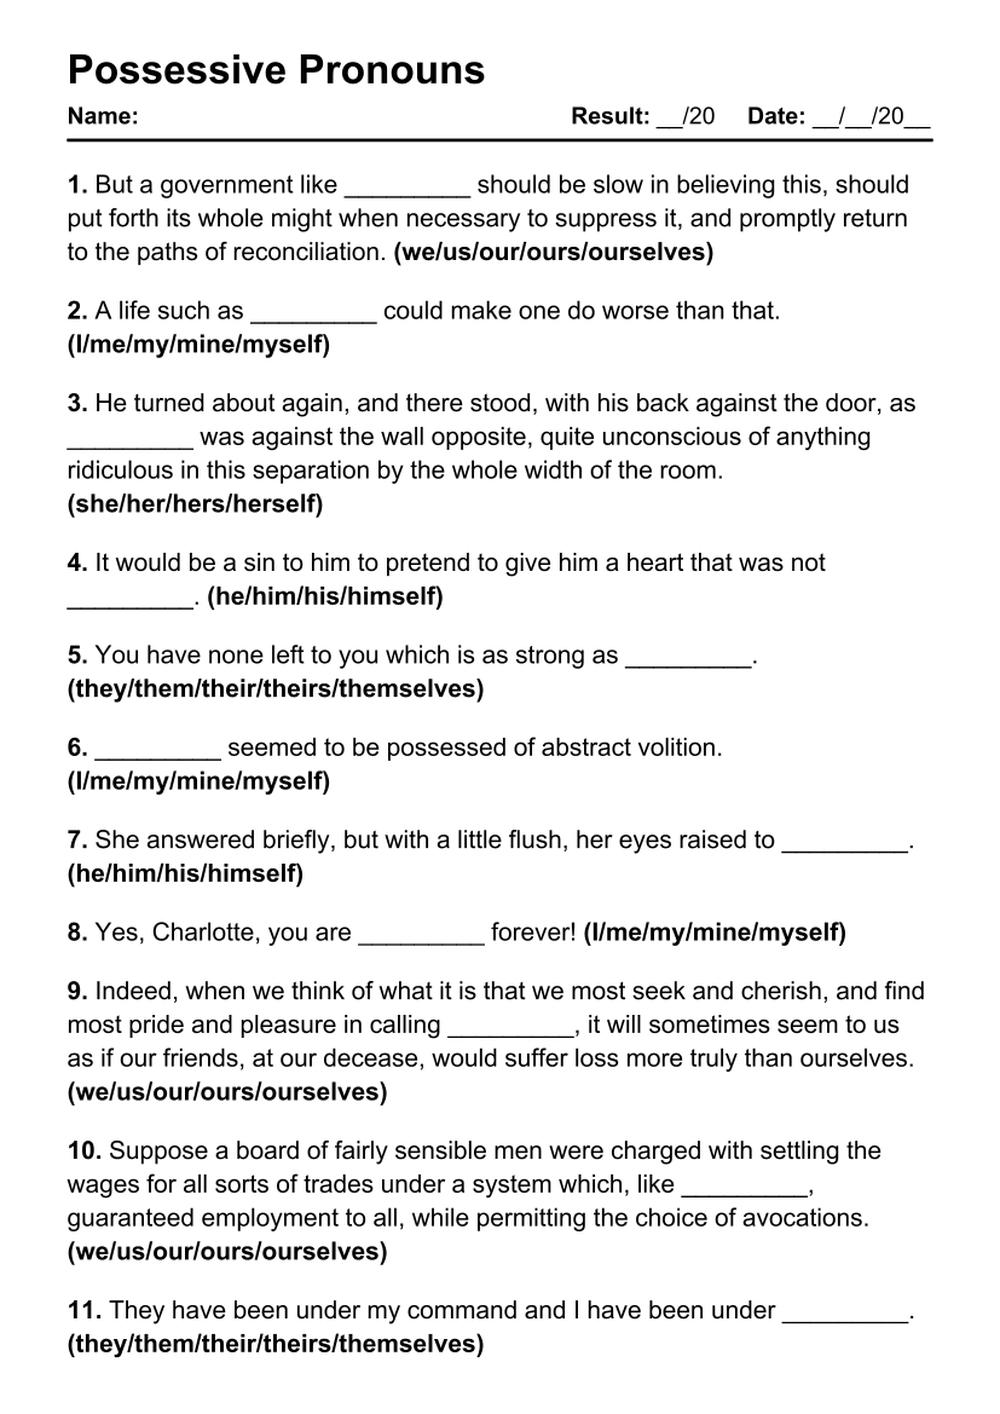 Printable Possessive Pronouns Exercises - PDF Worksheet with Answers - Test 87